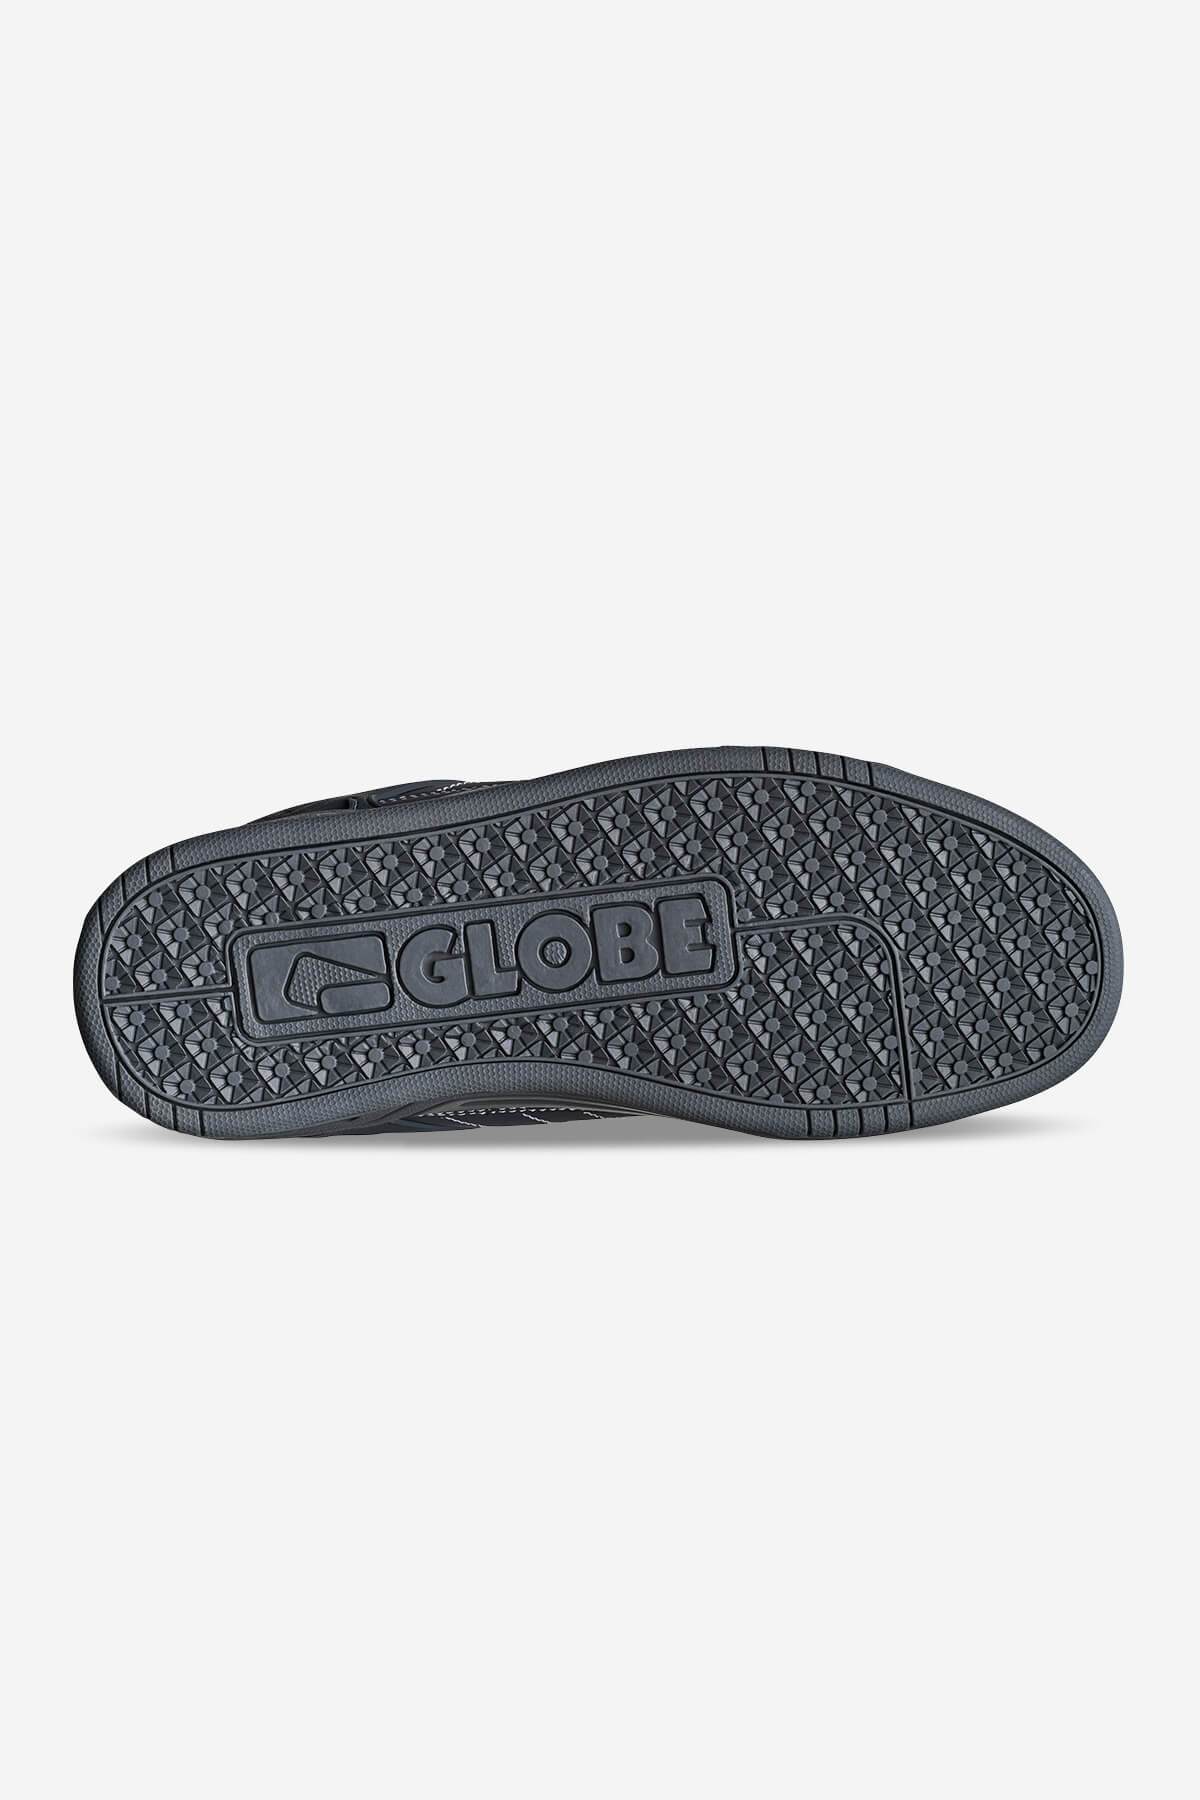 Globe - Tilt - Ebony/Stitch - skateboard Sapatos